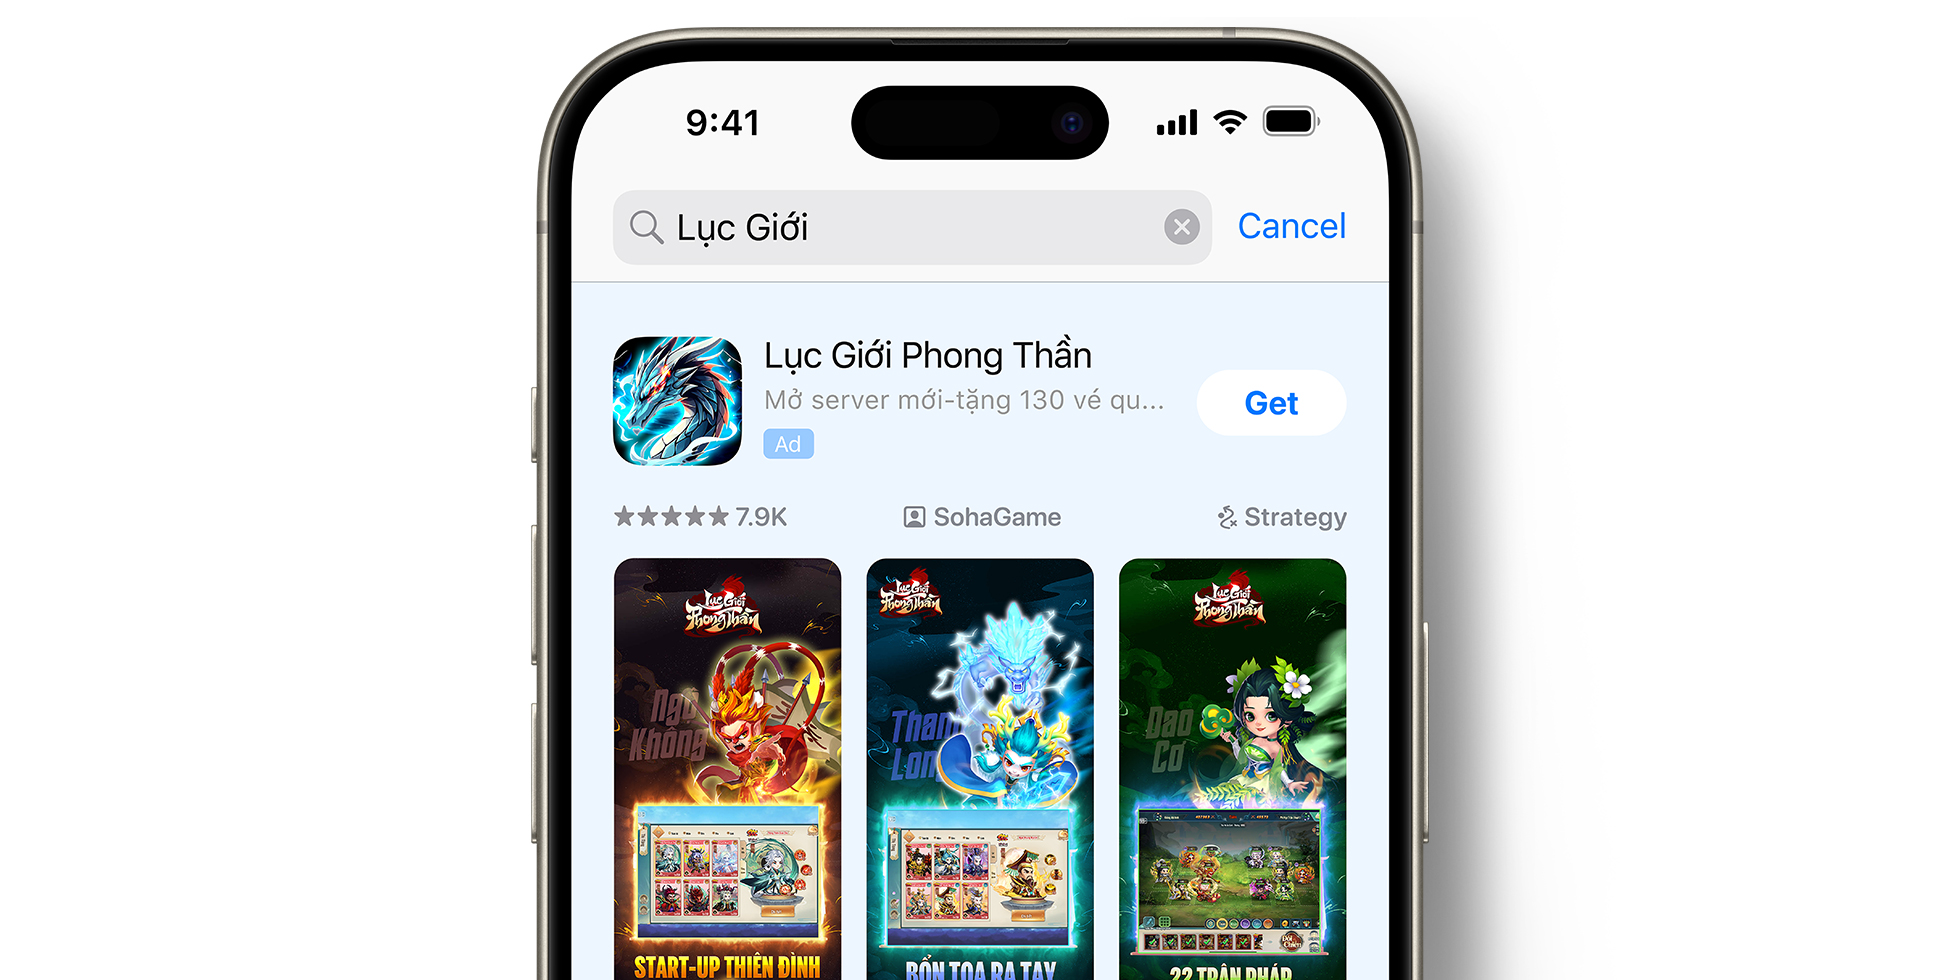 Long Thần Lục Giới ad on the App Store 